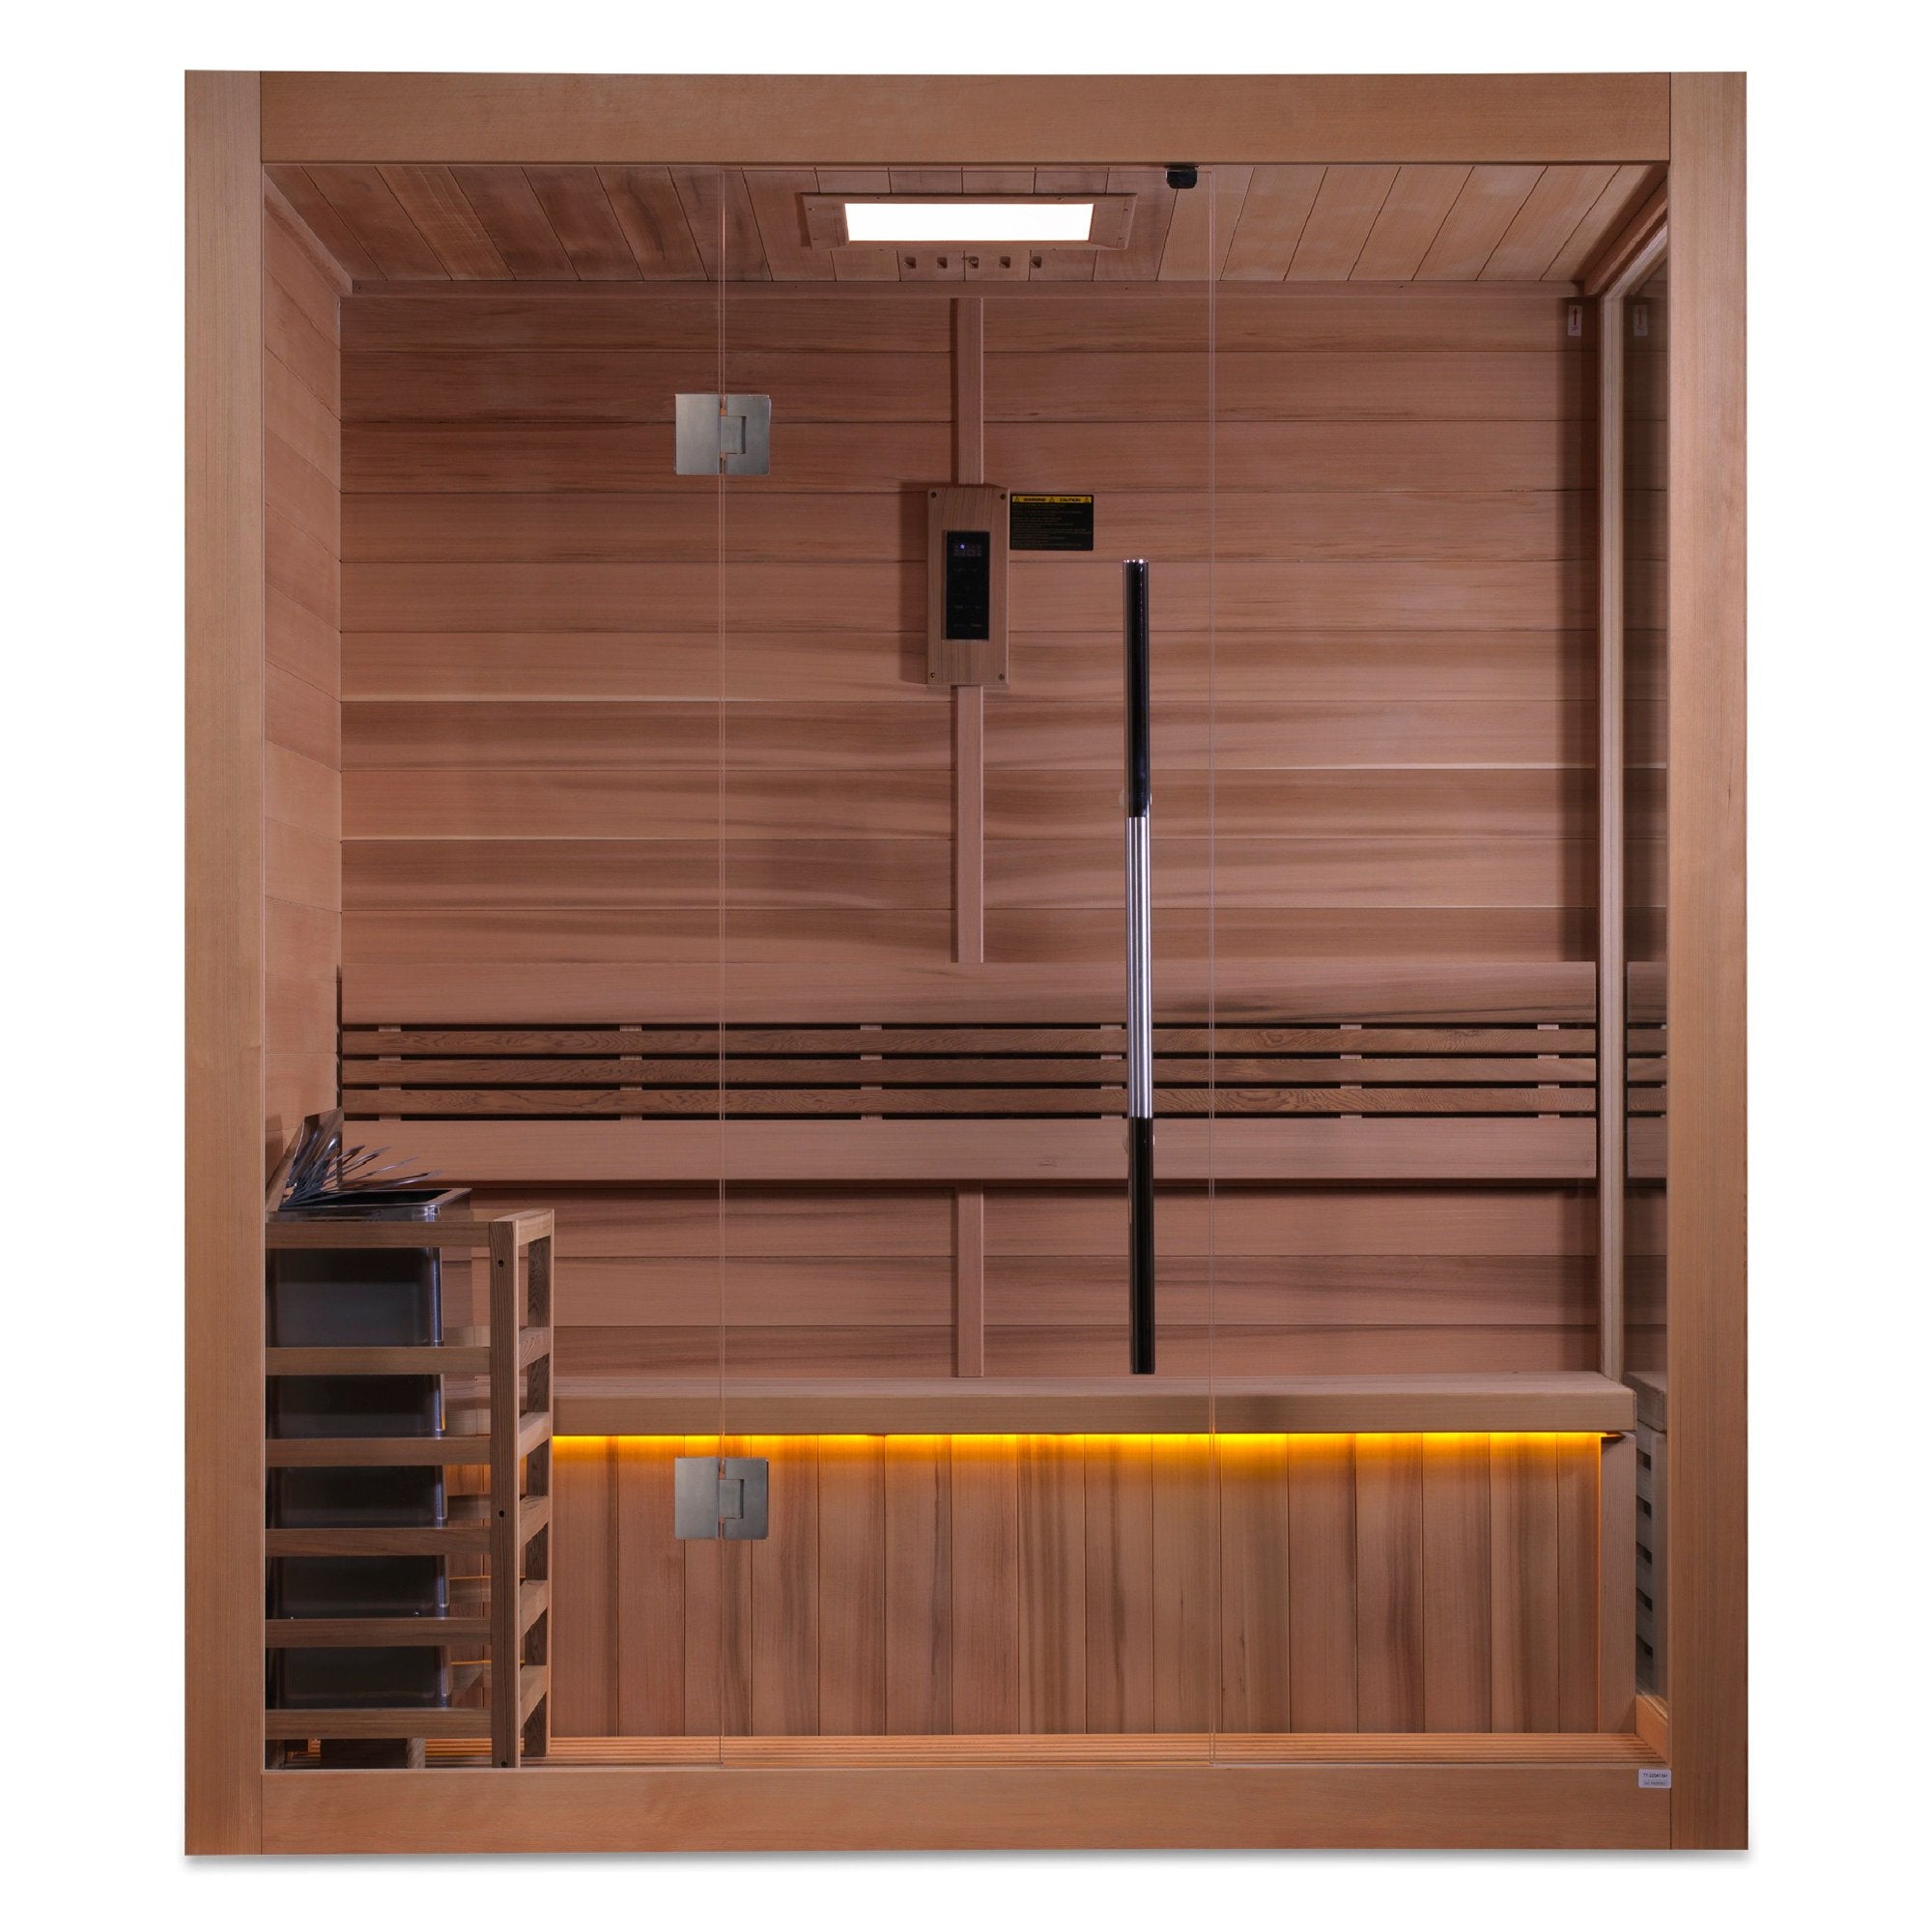 Golden Designs Forssa Edition 3 Person Indoor Traditional Sauna Indoor Sauna Golden Designs Saunas   